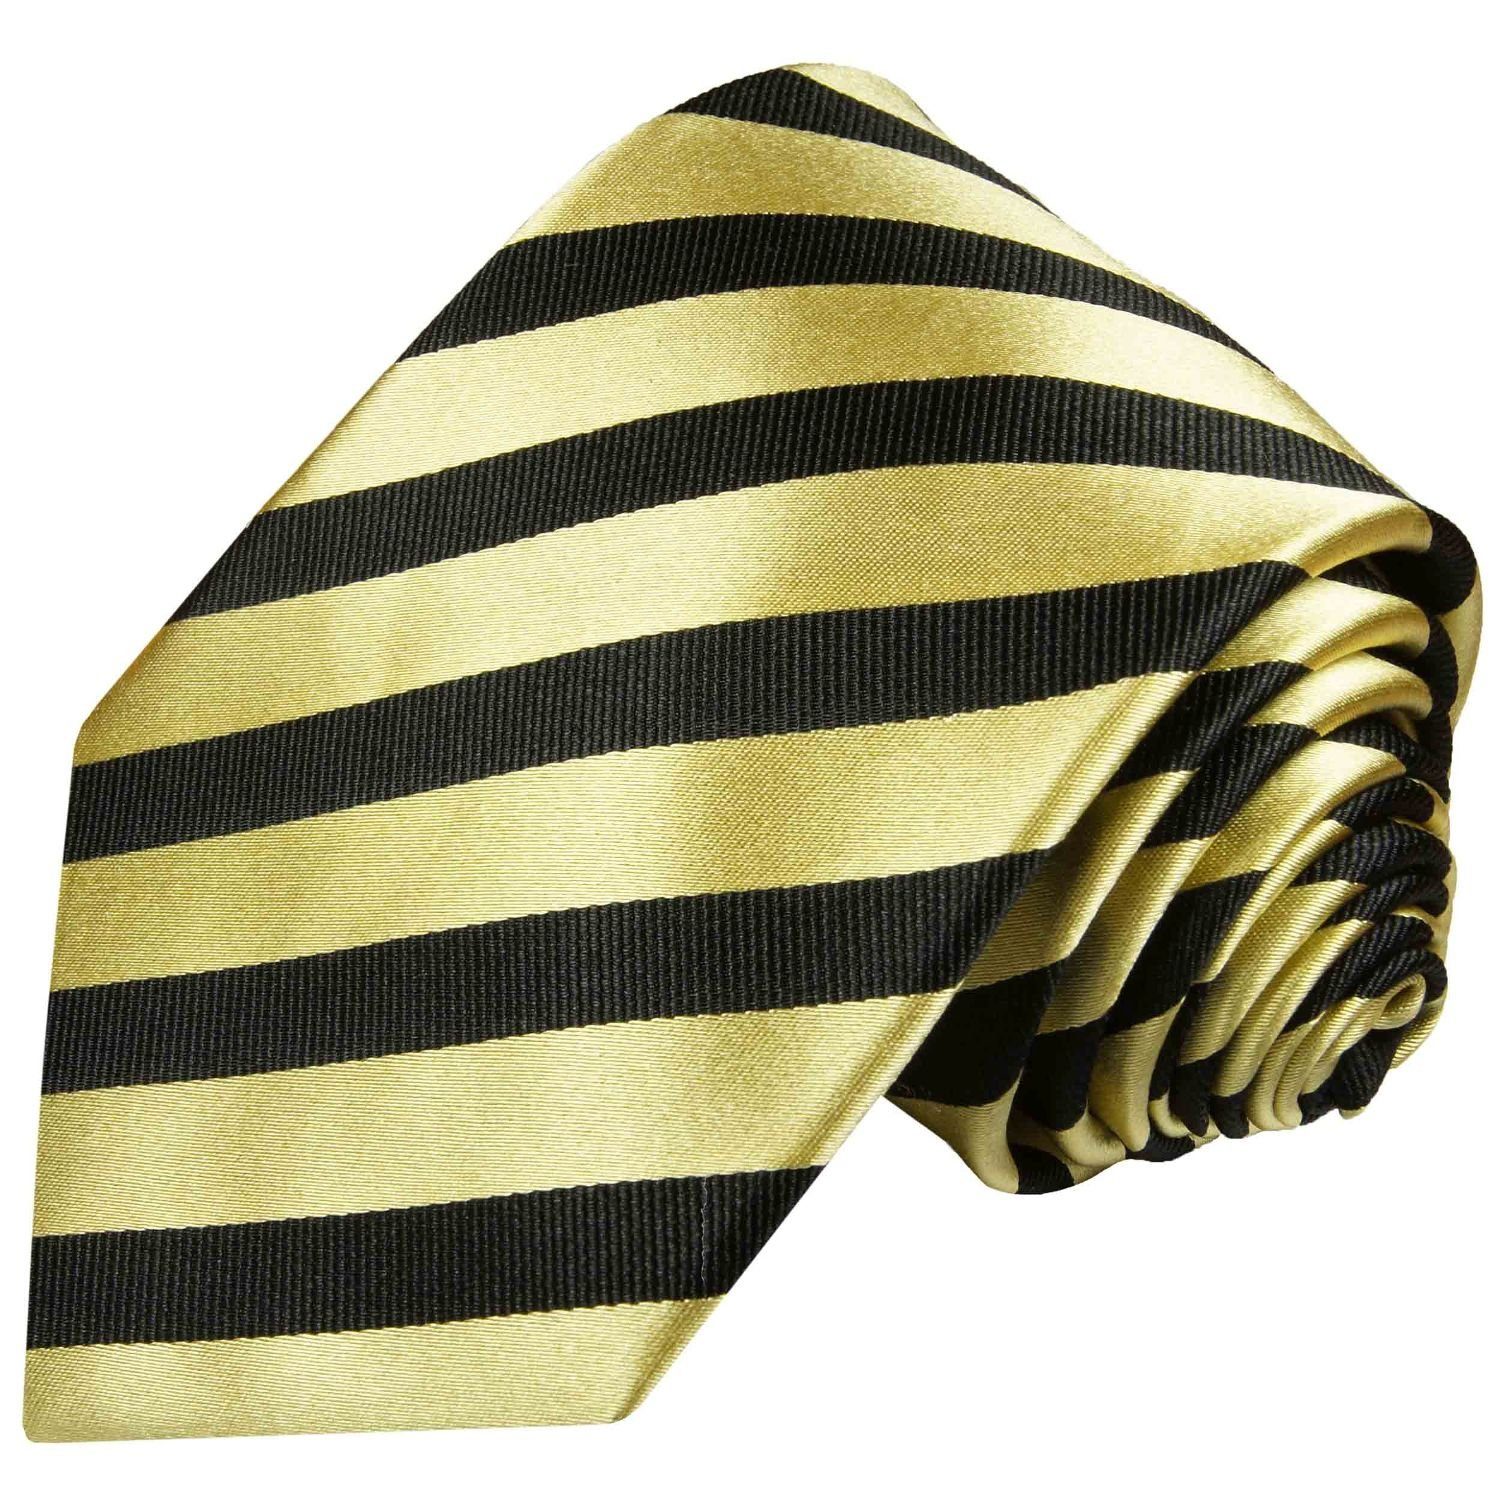 Paul Malone Krawatte Moderne Herren Seidenkrawatte gestreift 100% Seide Schmal (6cm), gold schwarz 335